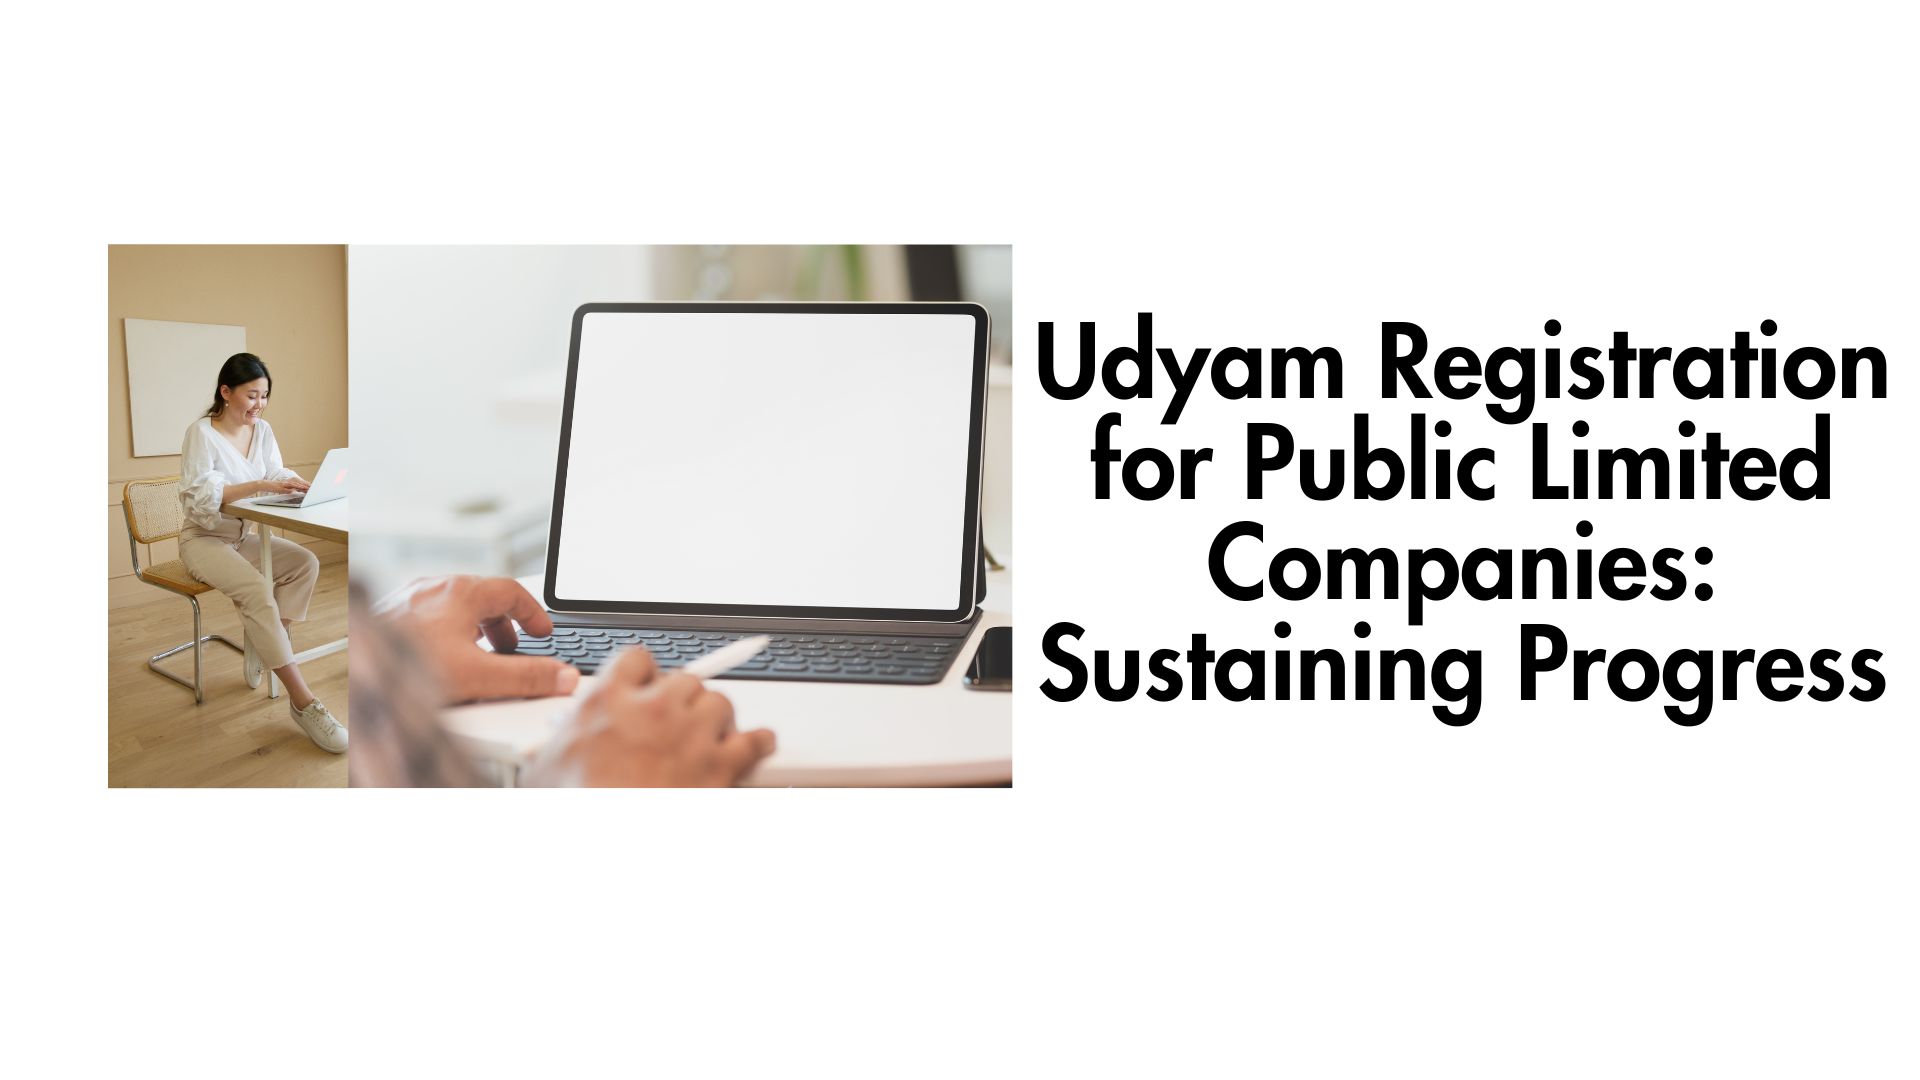 Udyam Registration for Public Limited Companies: Sustaining Progress